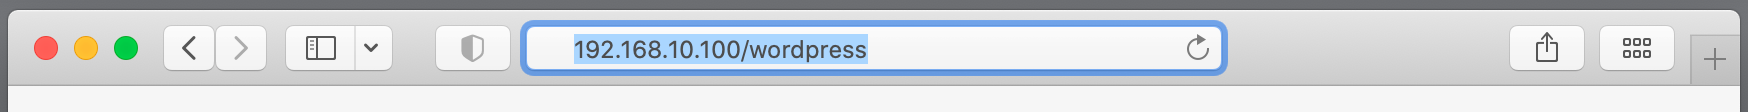 safari browser, address bar, ip address to wordpress site